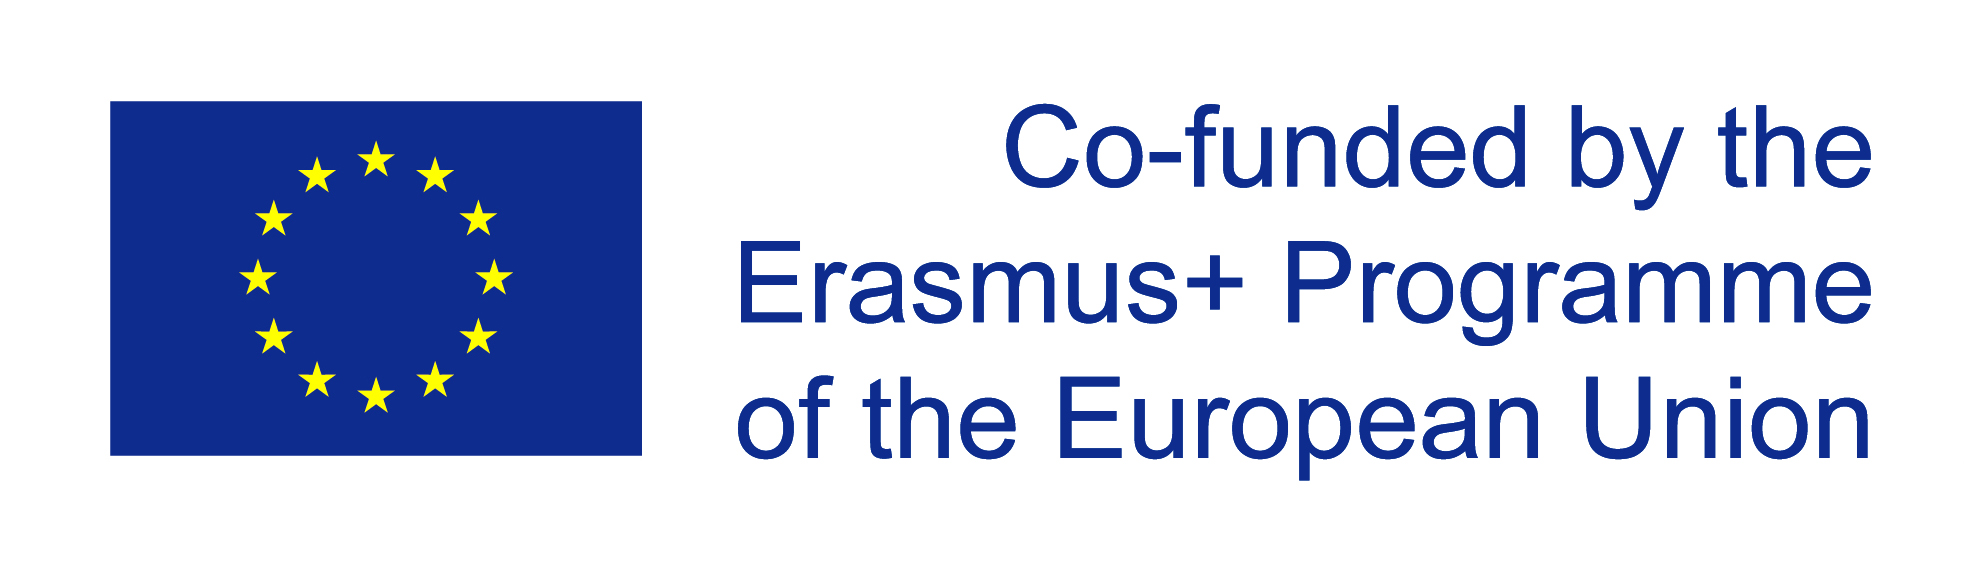 eu and partner logos